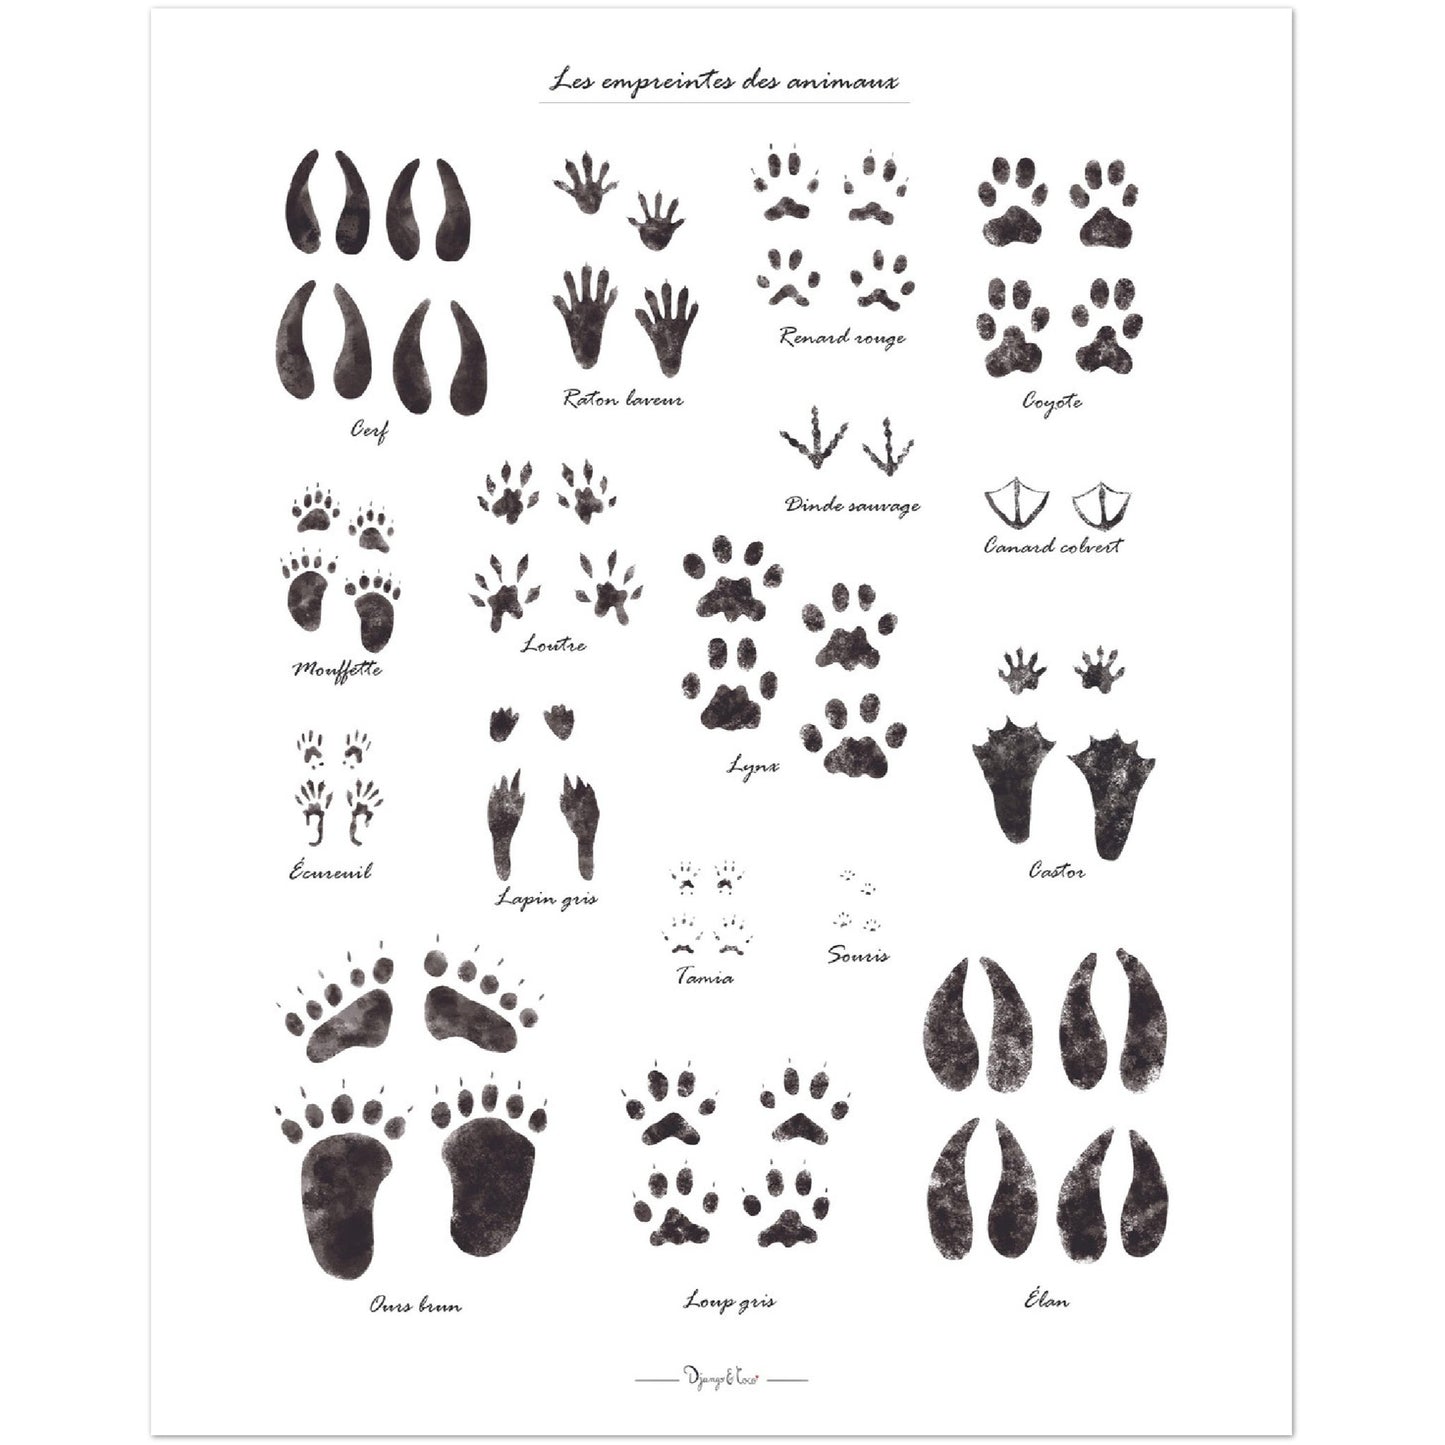 animal footprints